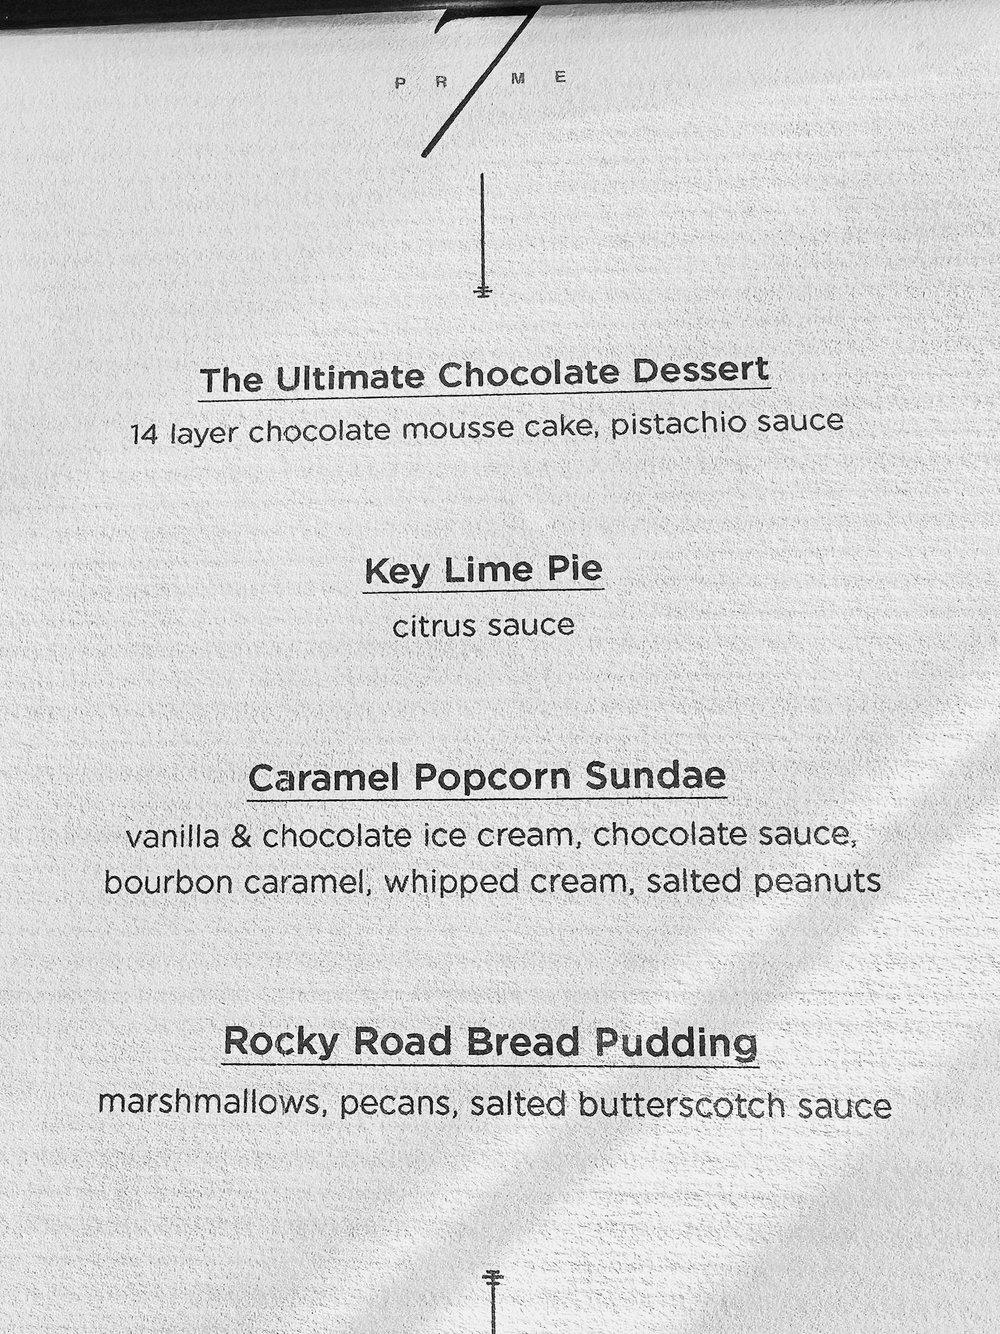 Dessert menu